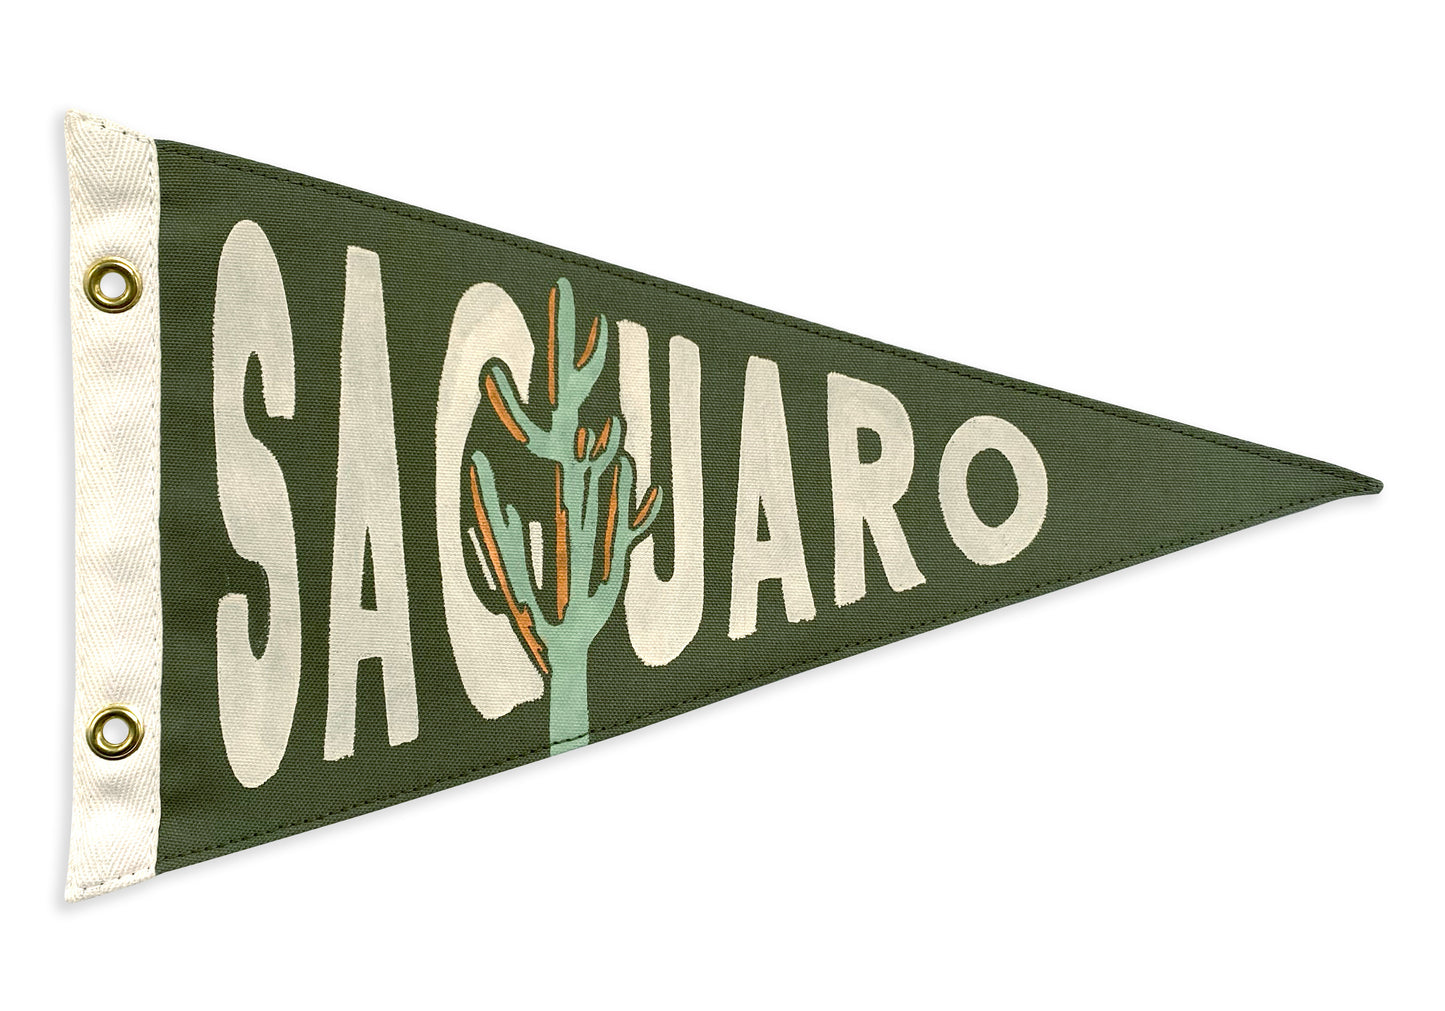 Saguaro National Park Pennant